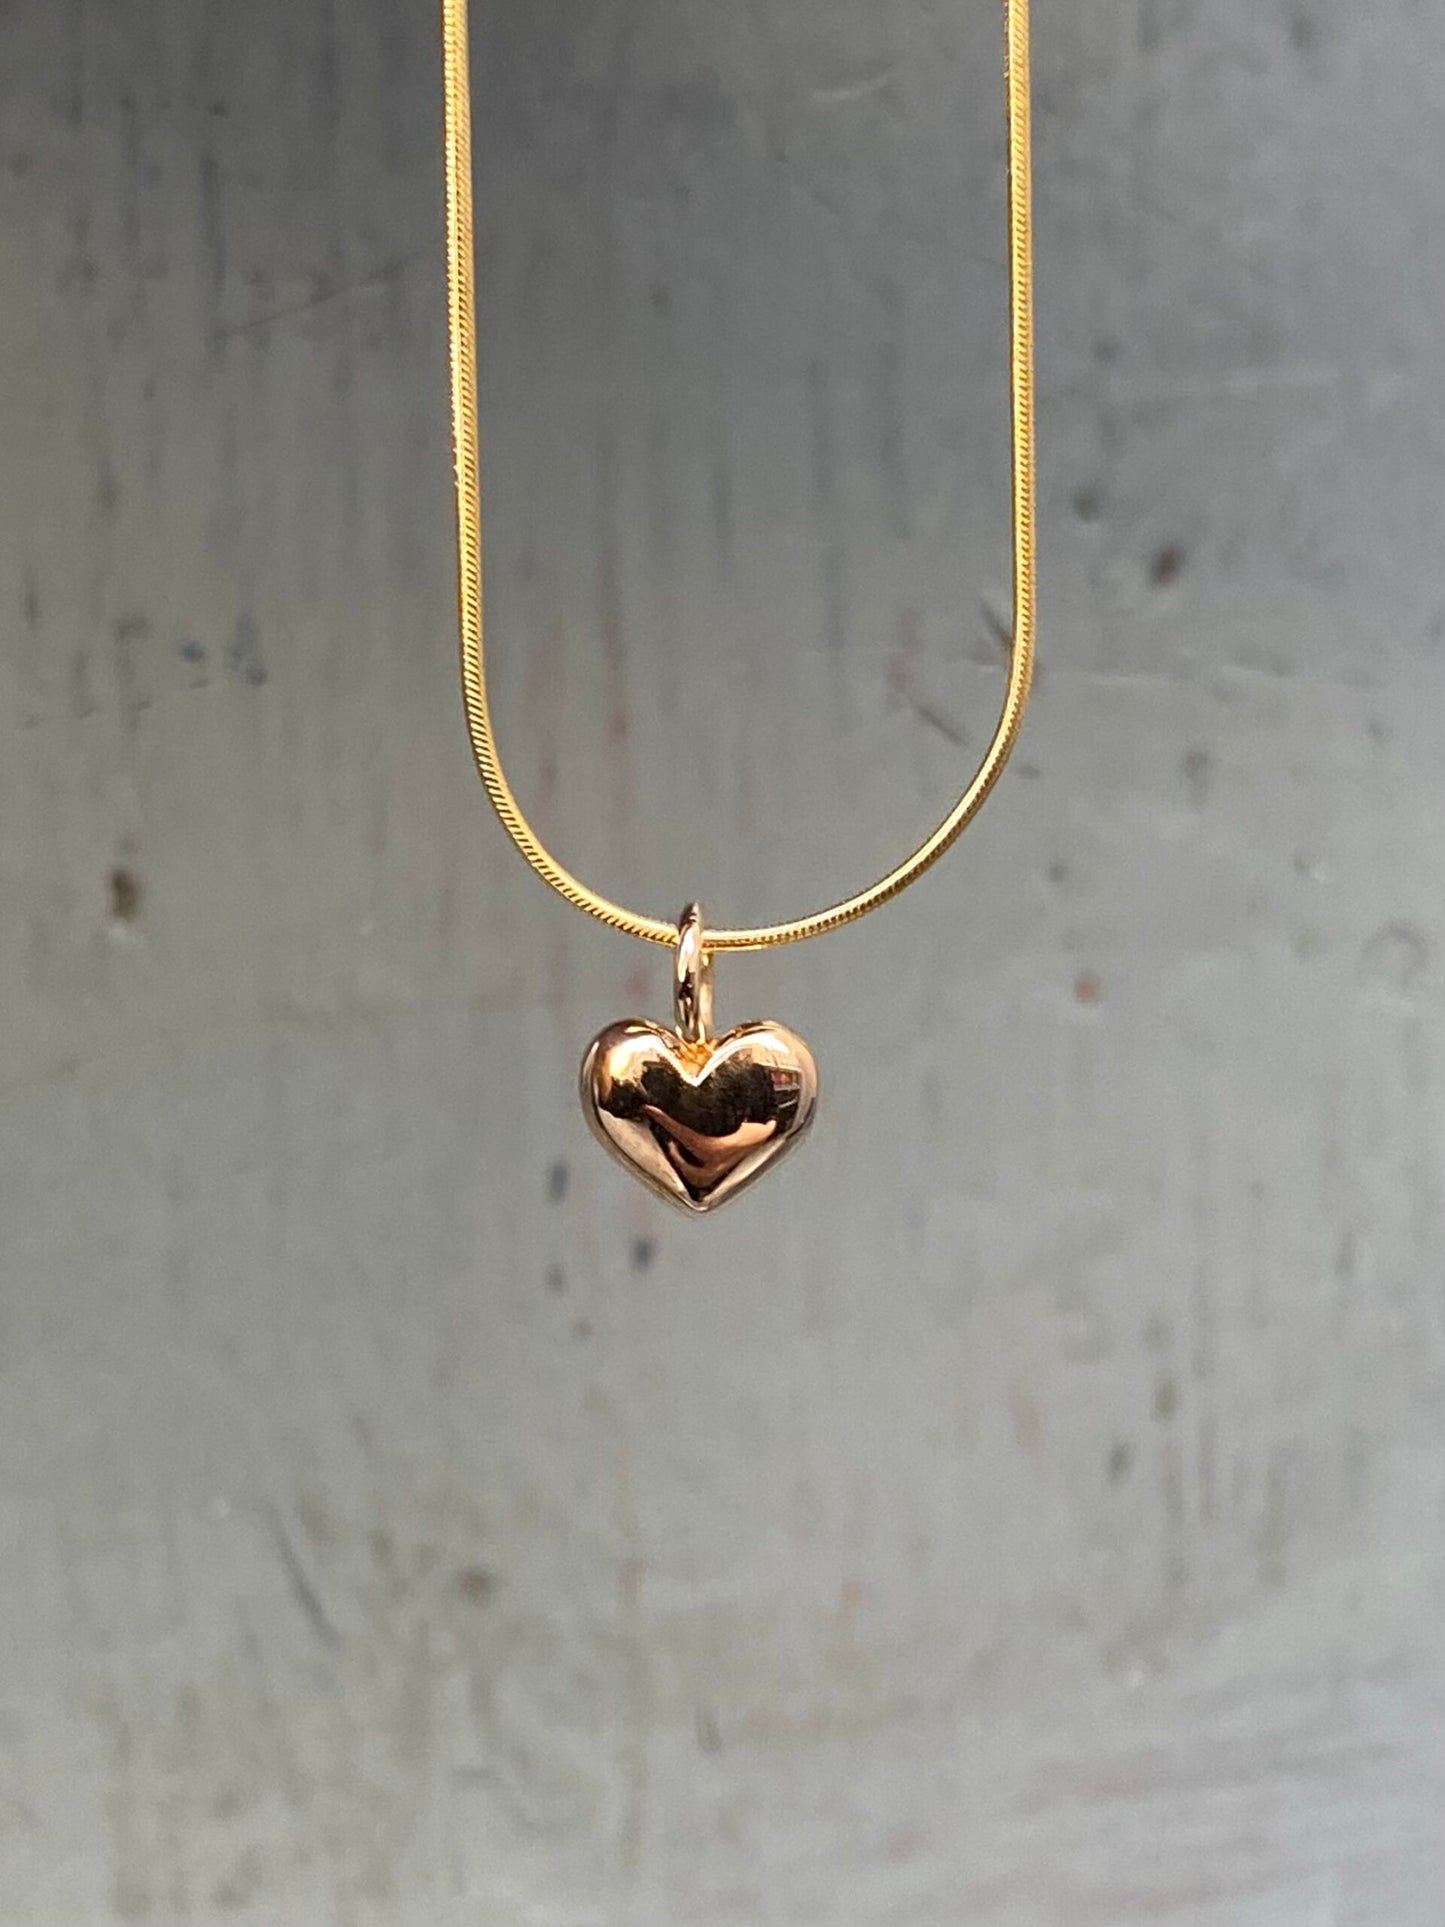 Gold Heart Pendant Necklace -Gold   14 Karat